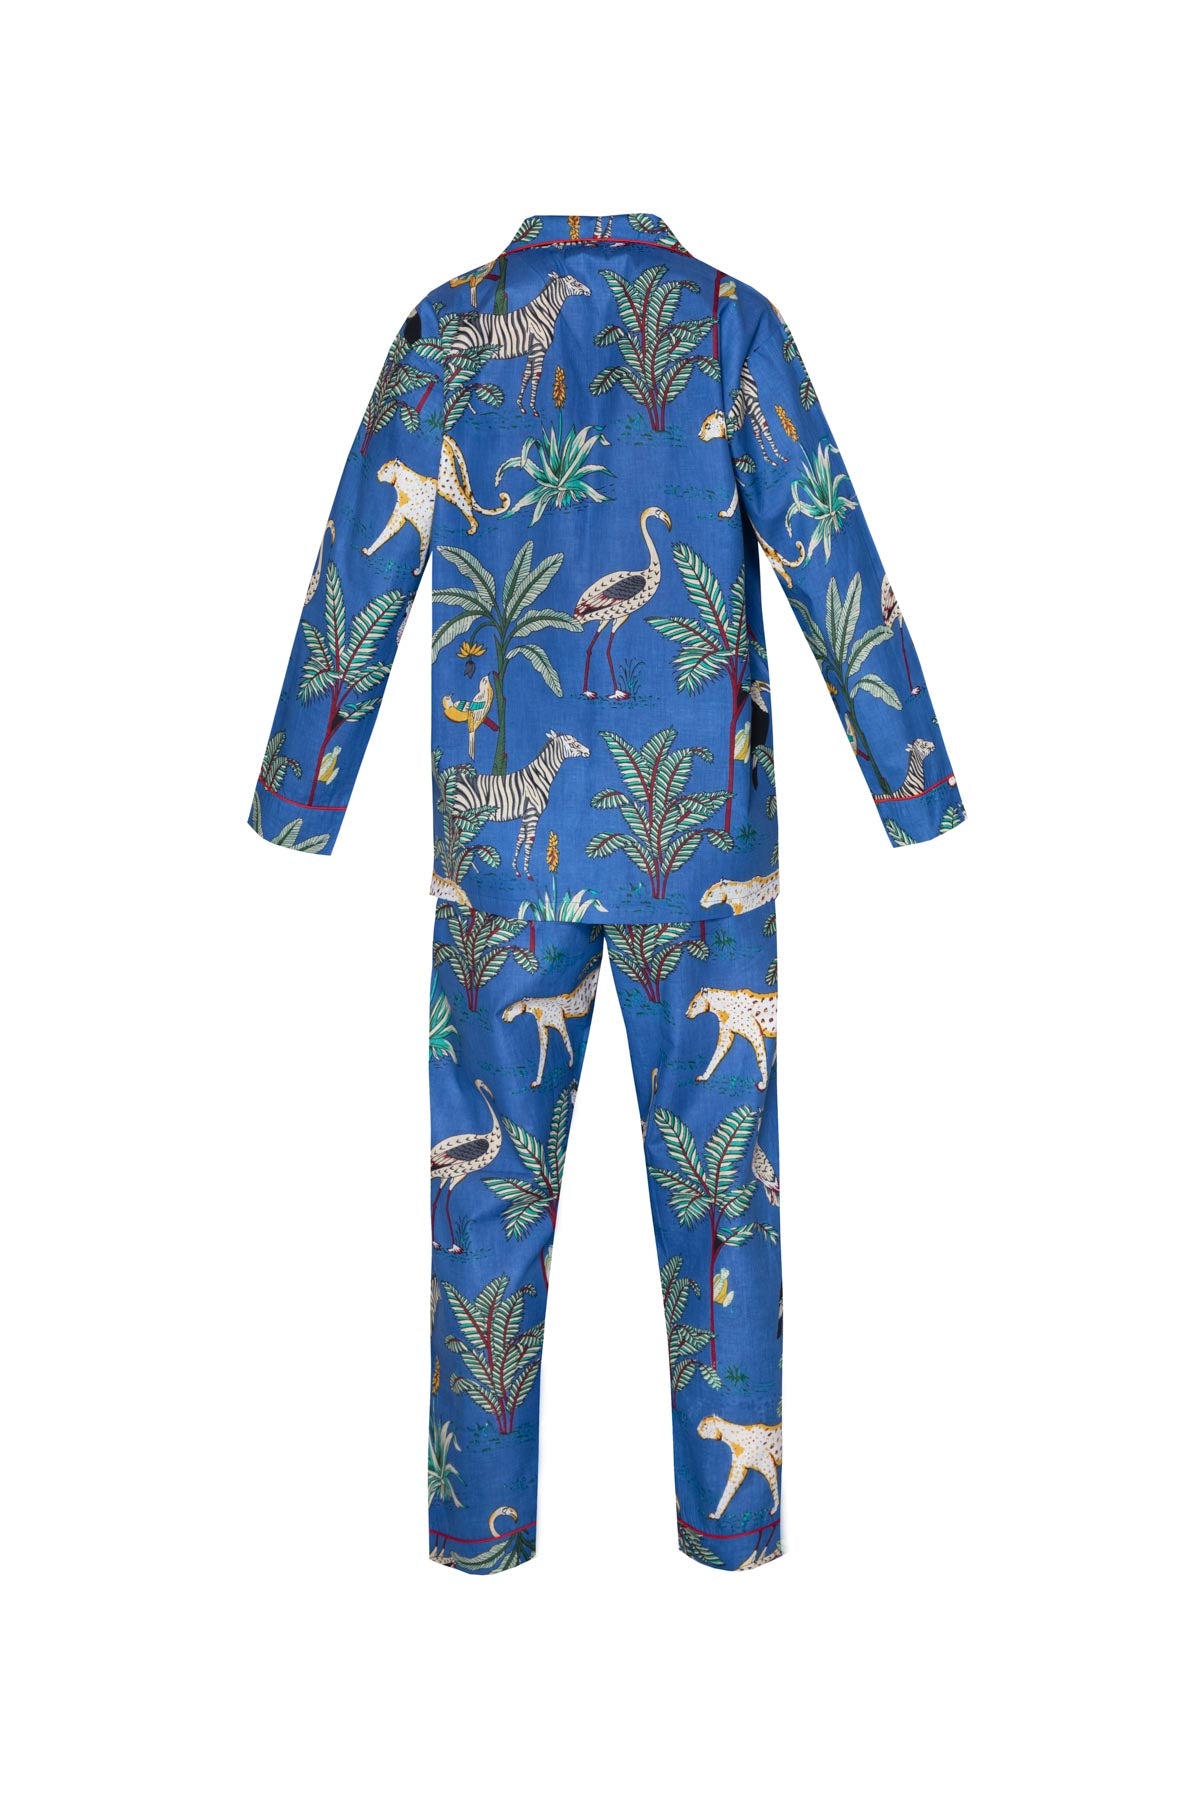 Cotton Jungle Print Pyjamas - Dark Blue